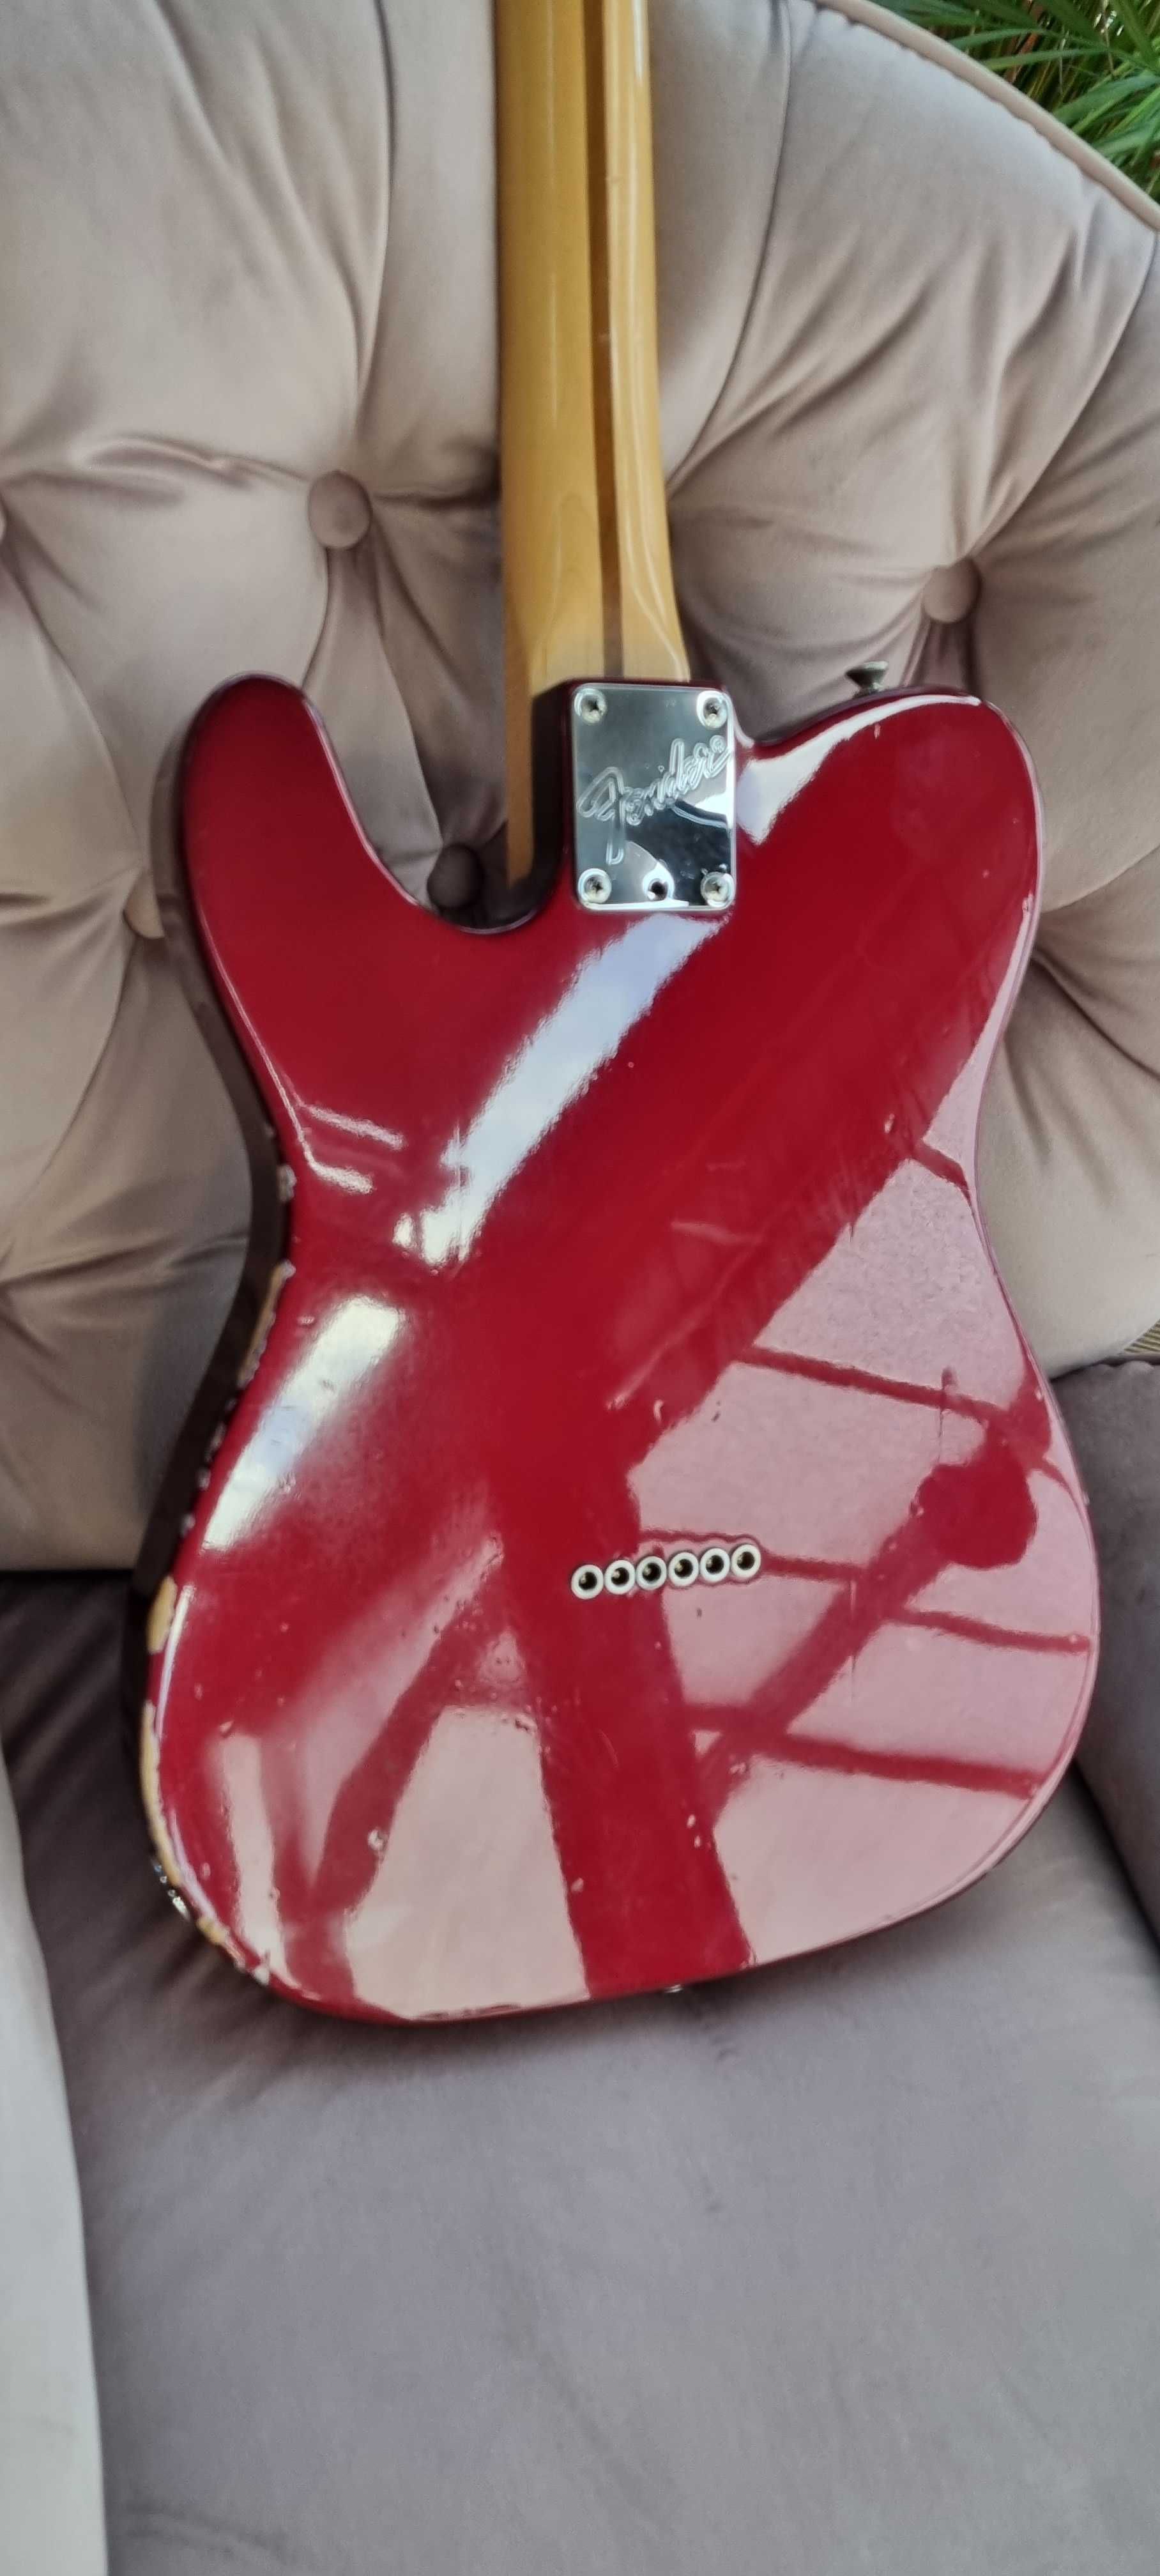 Fender Telecaster Standard usa 1989r natural relic